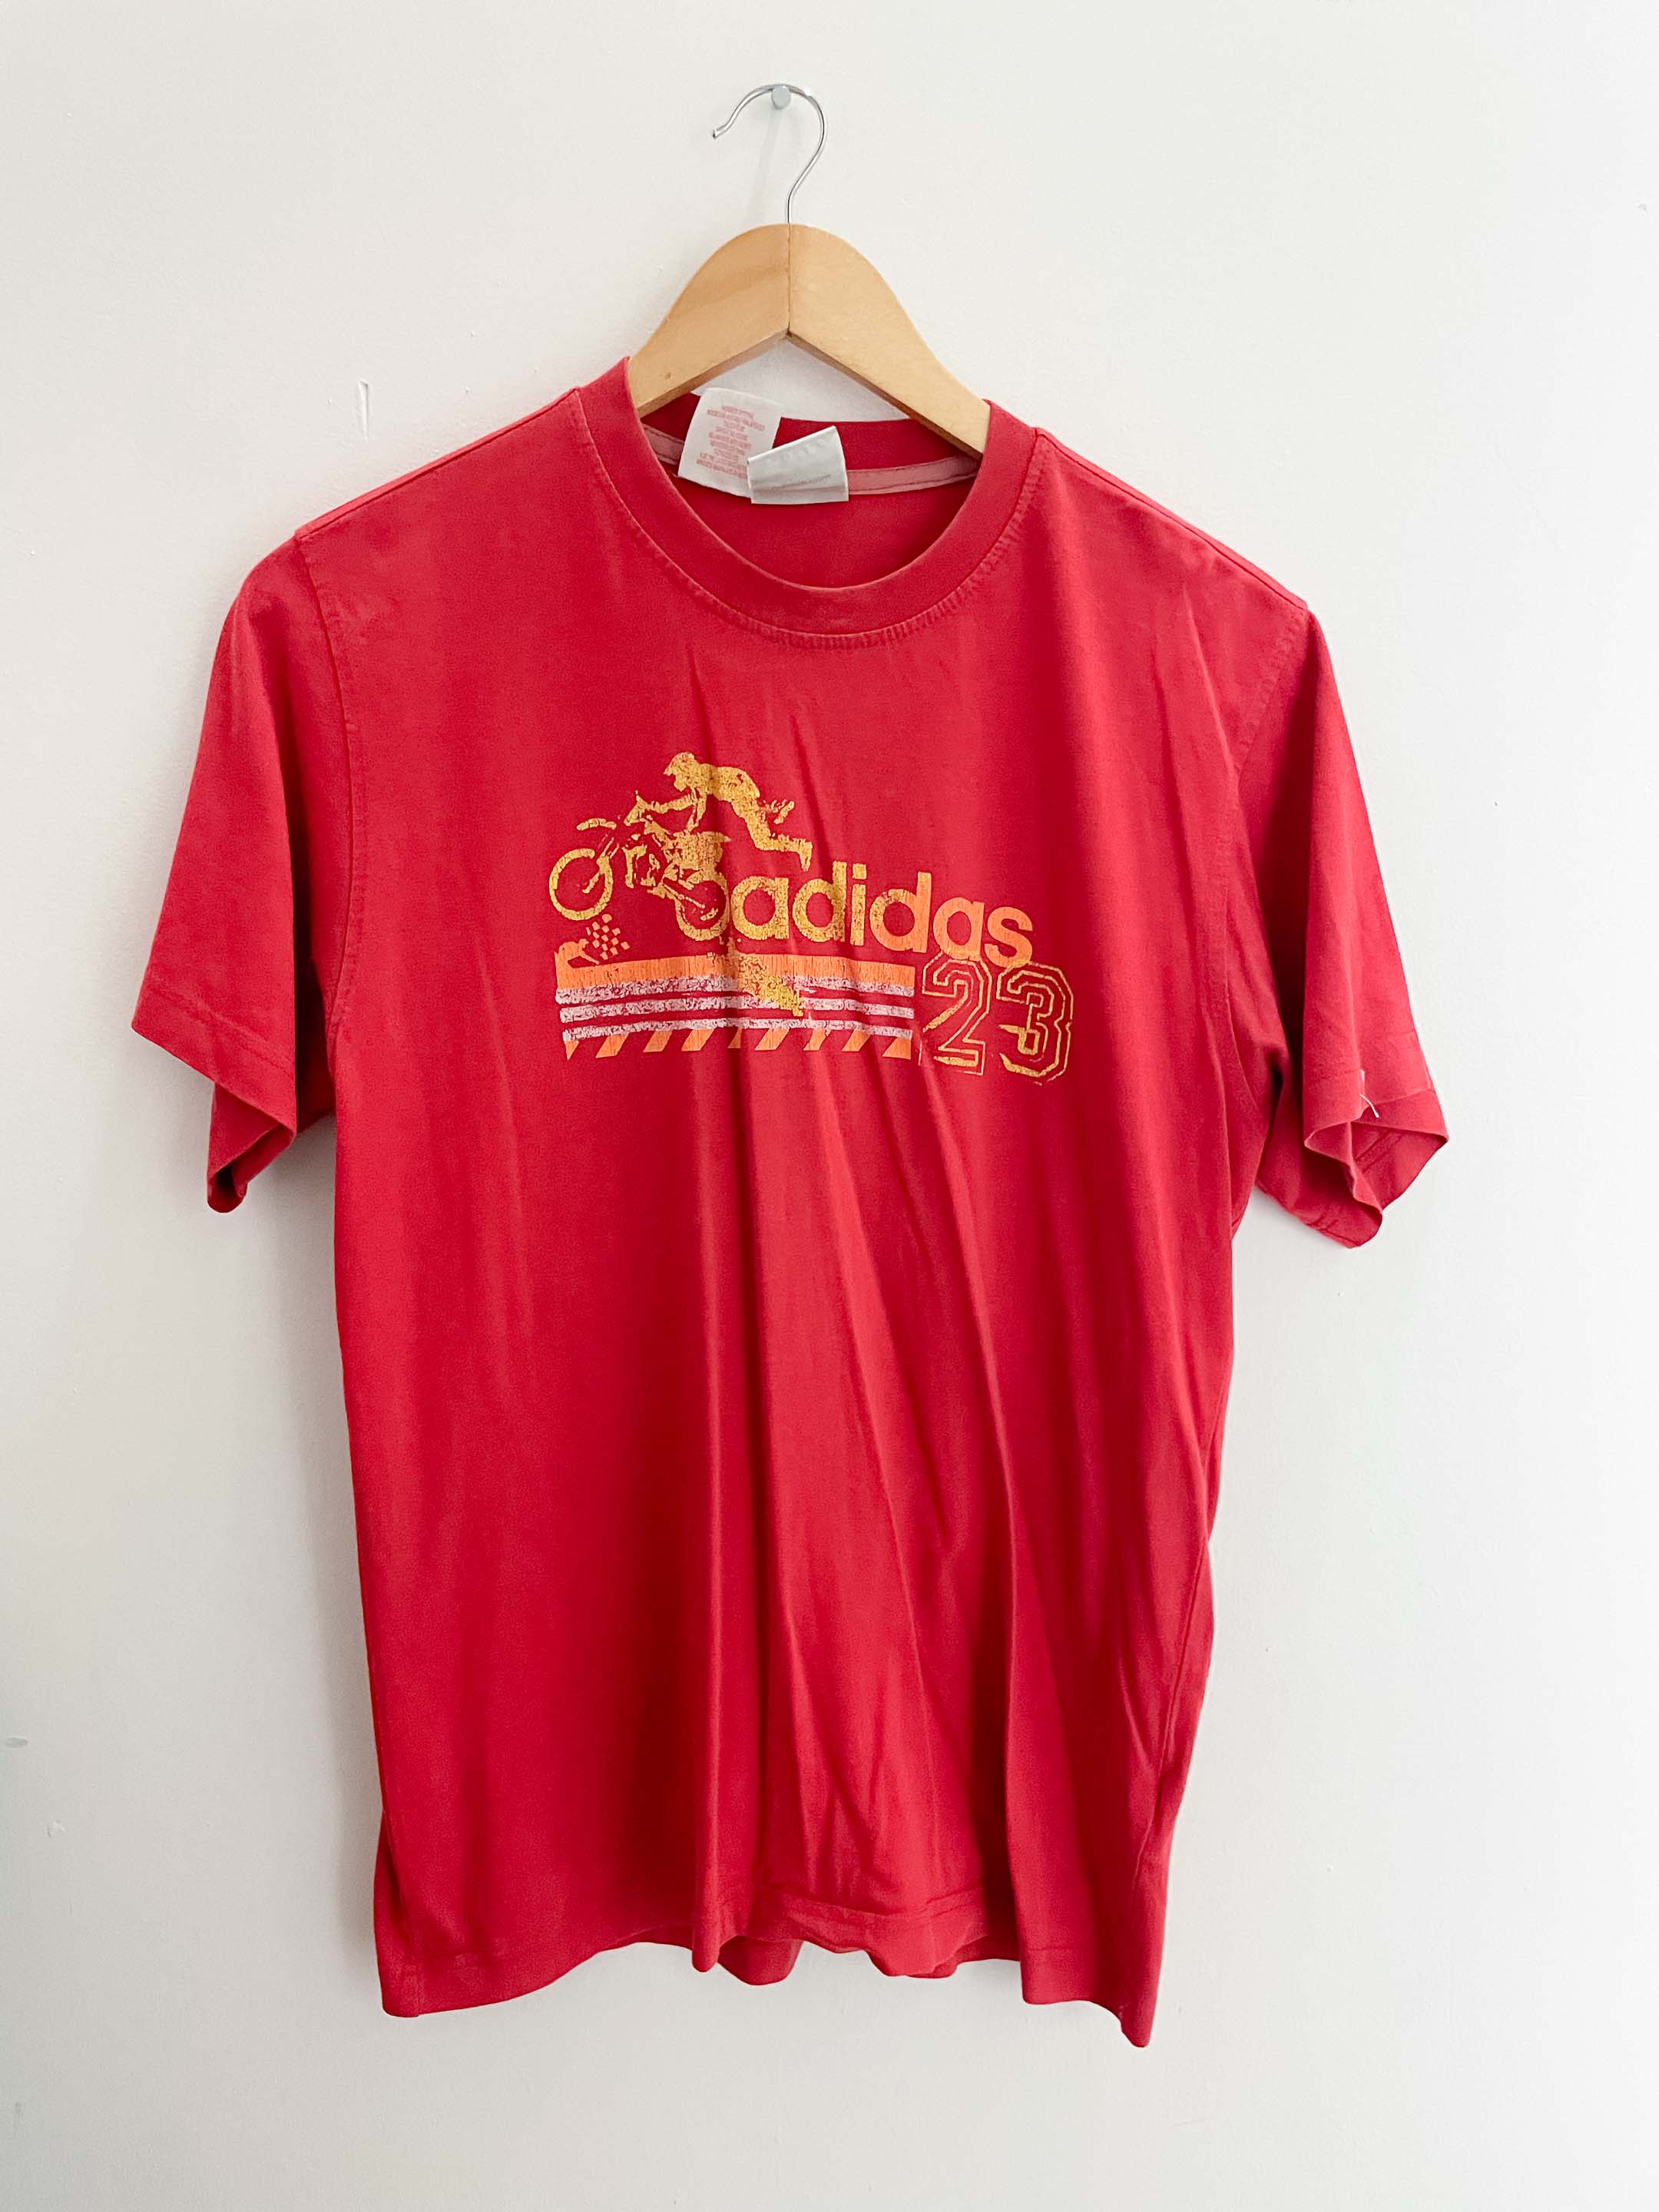 Vintage Red adidas 23 Graphics T-Shirt